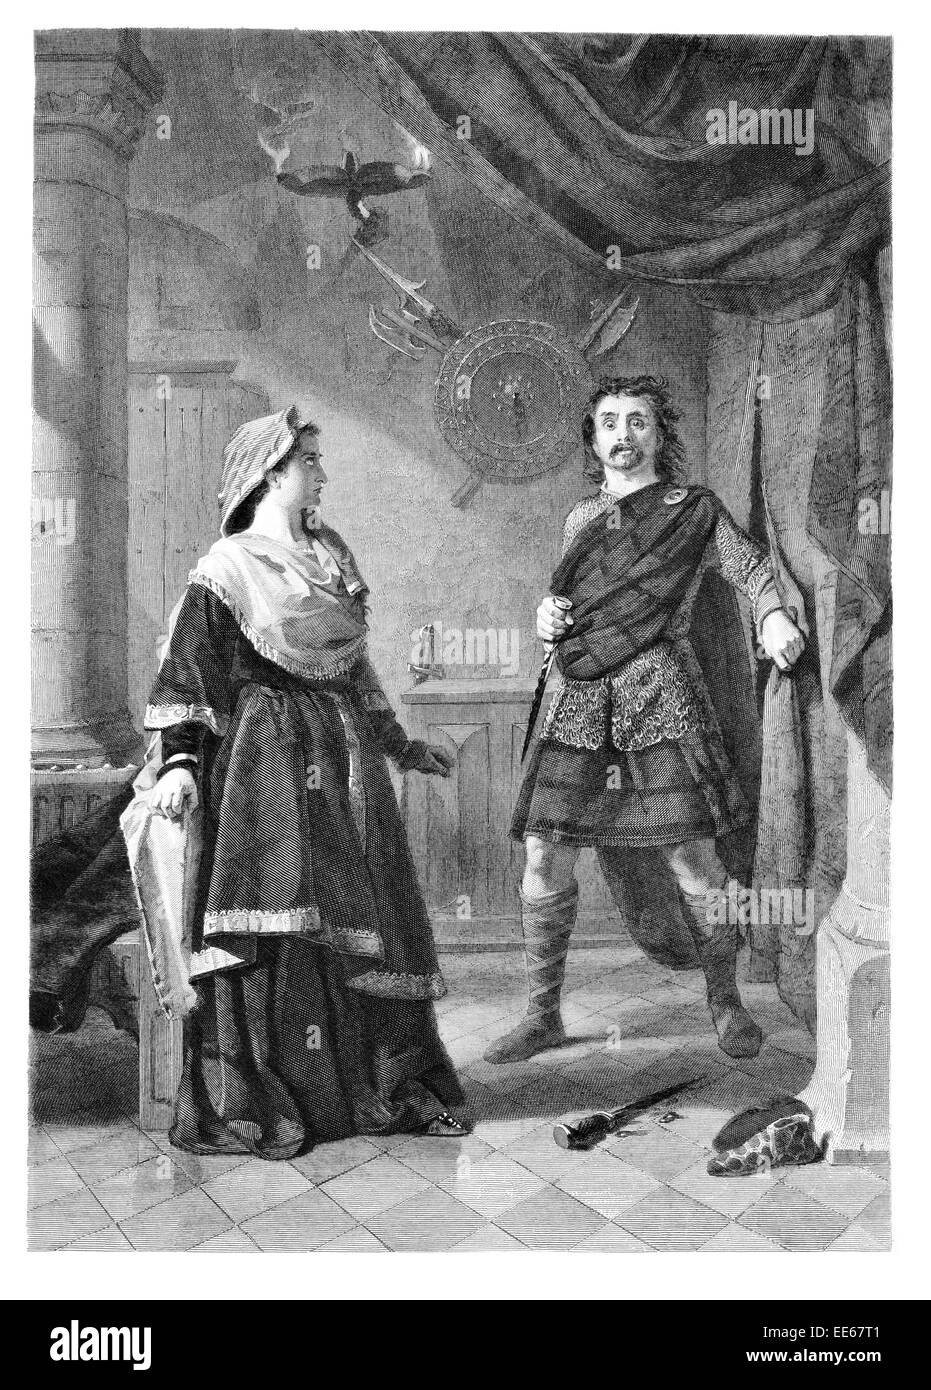 Macbeth by Alexander Johnston William Shakespeare Scottish period costume dress kilt tartan theater tragedy knife murder scene Stock Photo